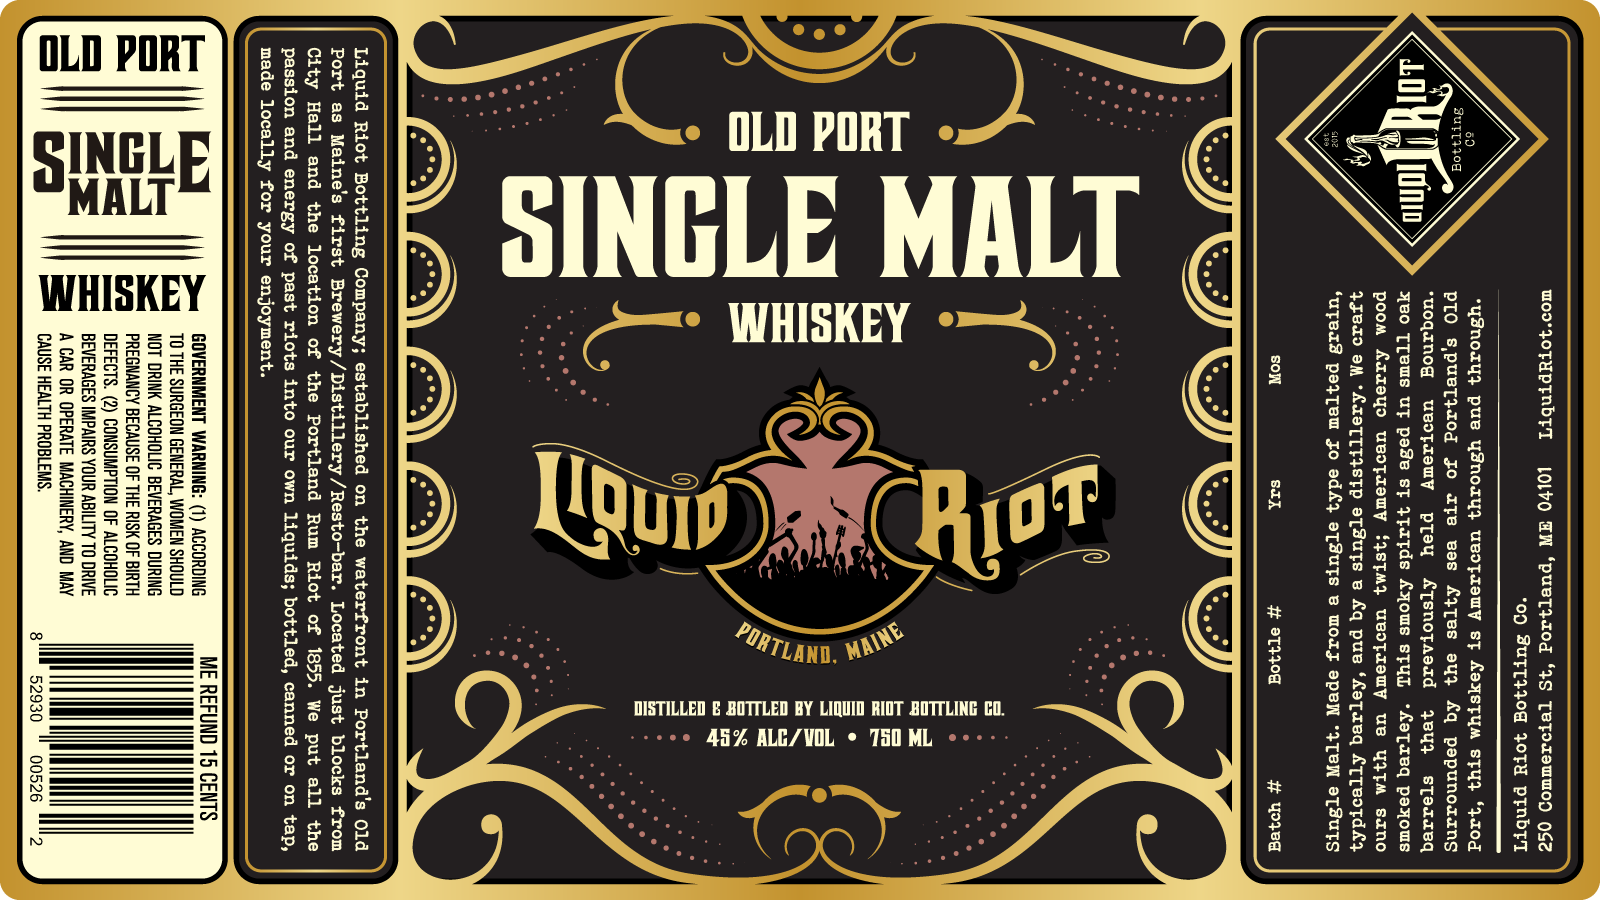 Liquid Riot – Old Port Single Malt Whiskey